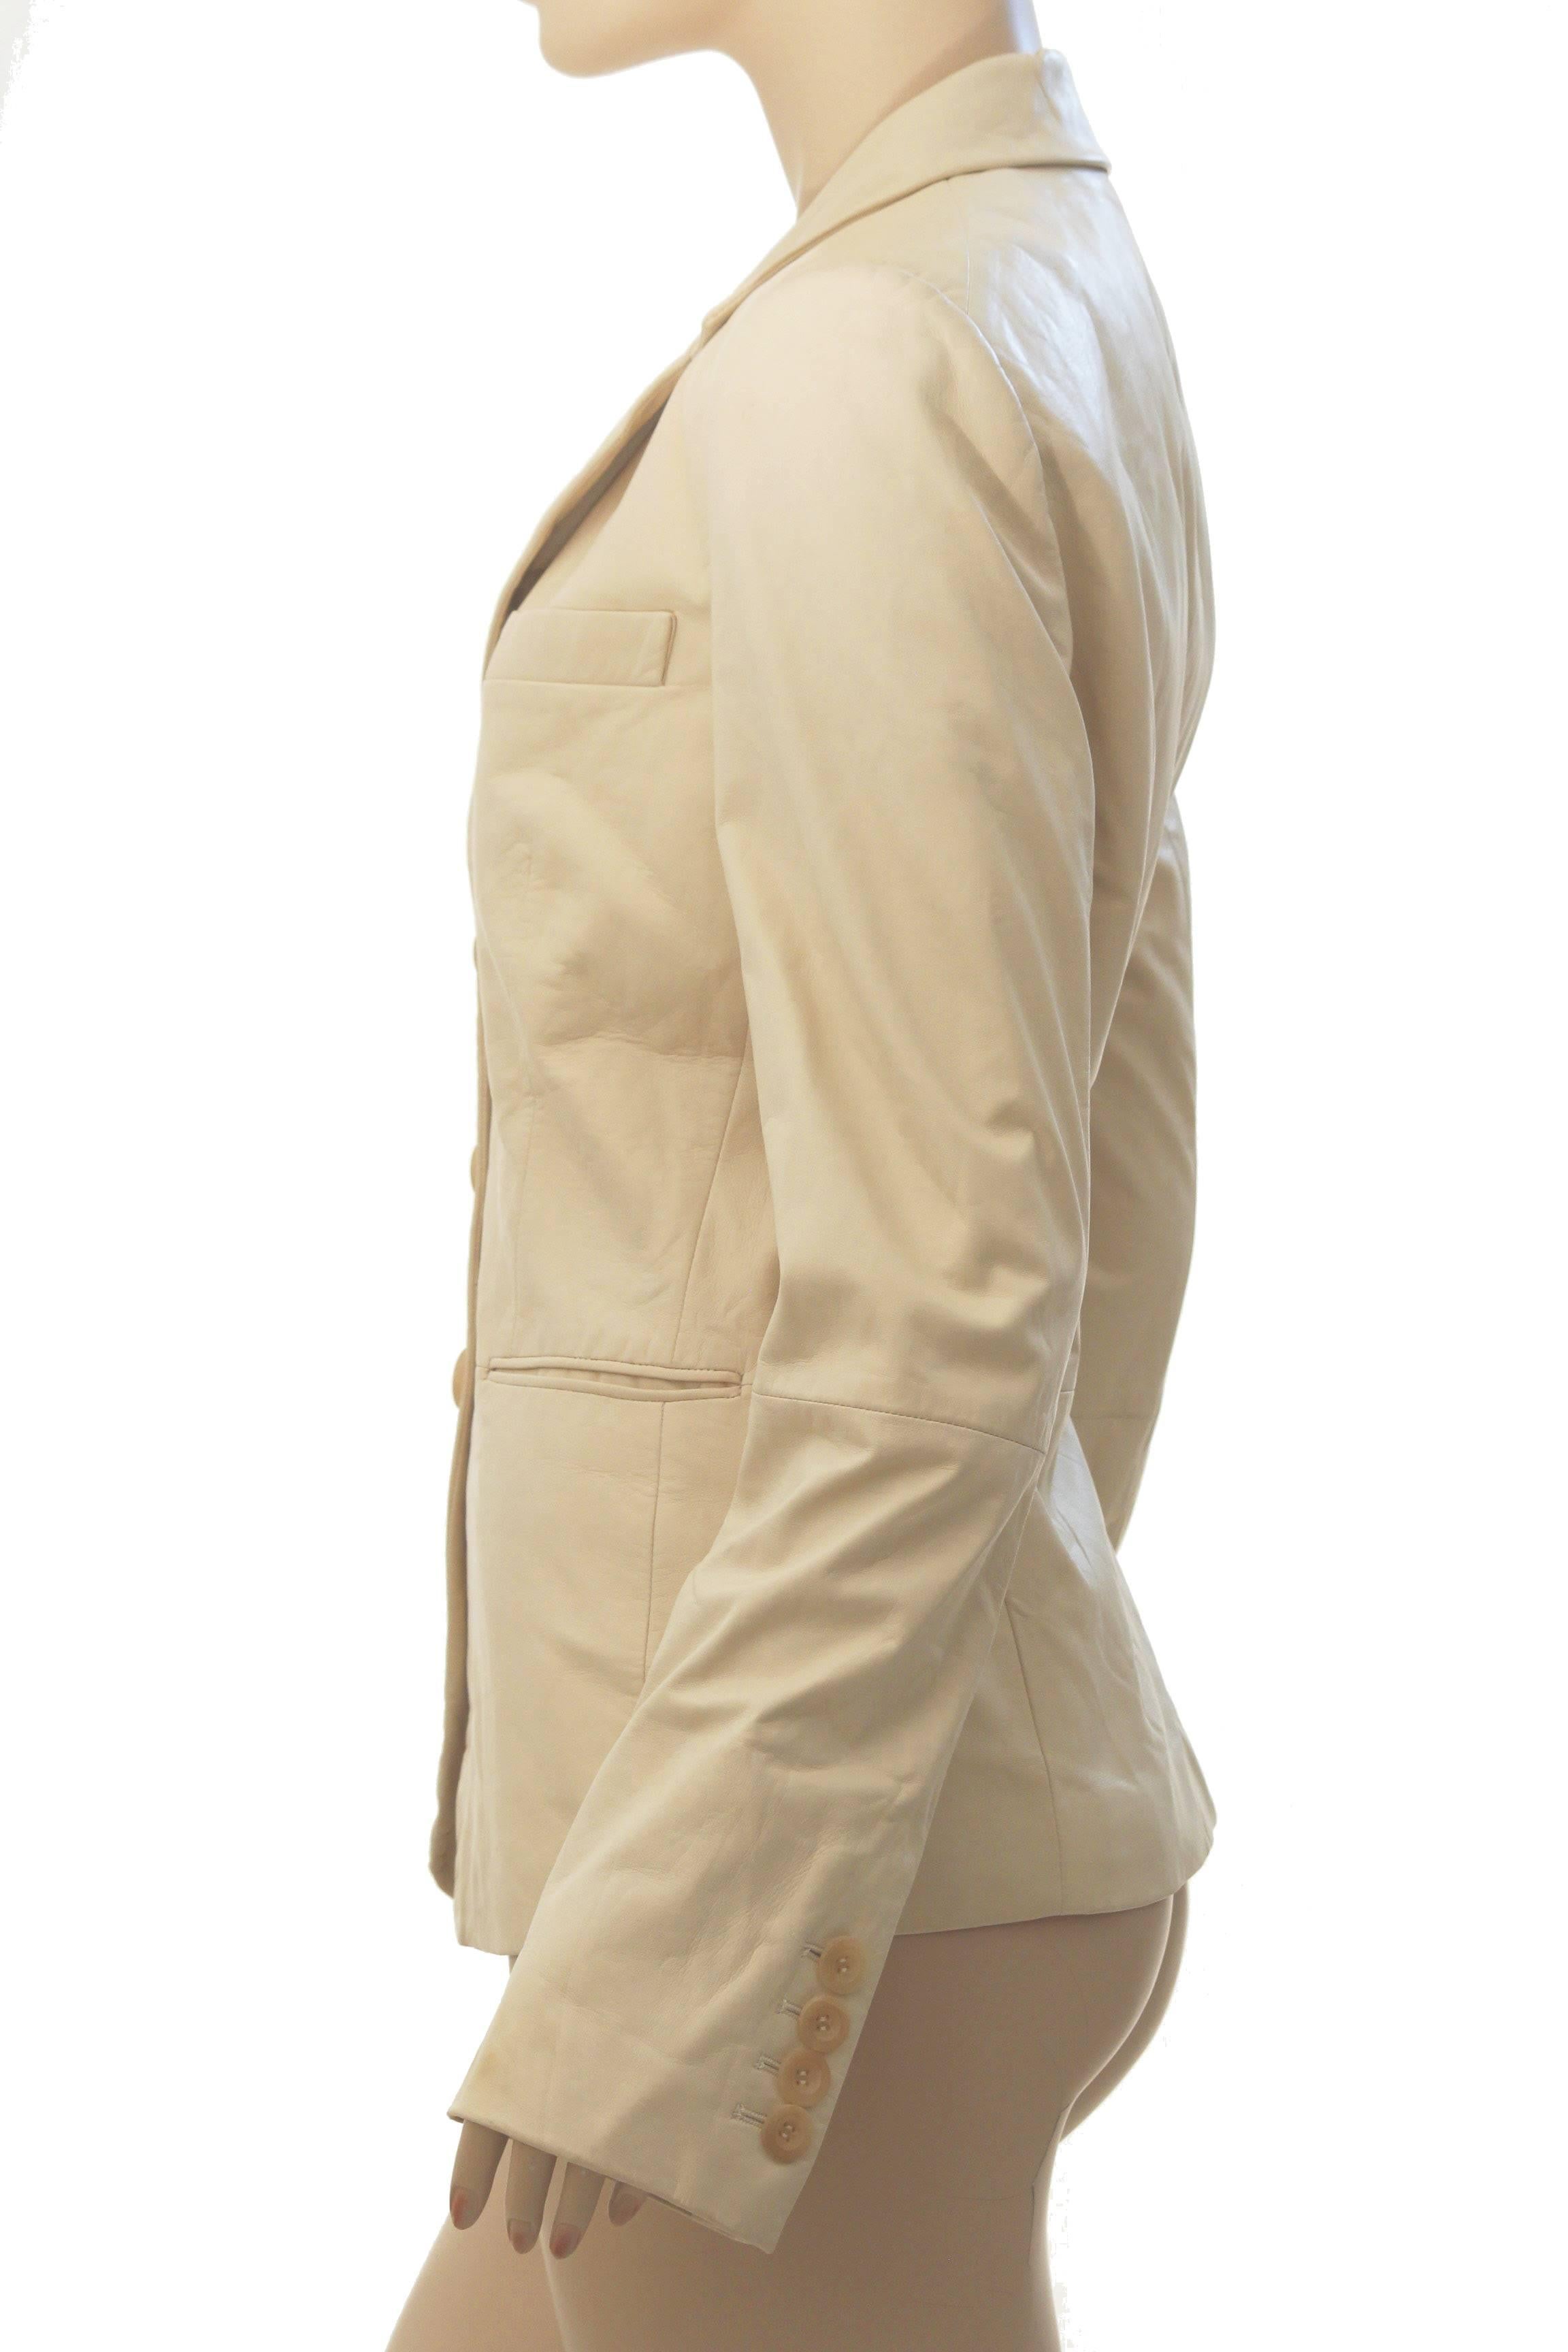 Salvatore Ferragamo Jacket Soft Leather Vanilla Cream Blazer Size 44 Italy For Sale 1